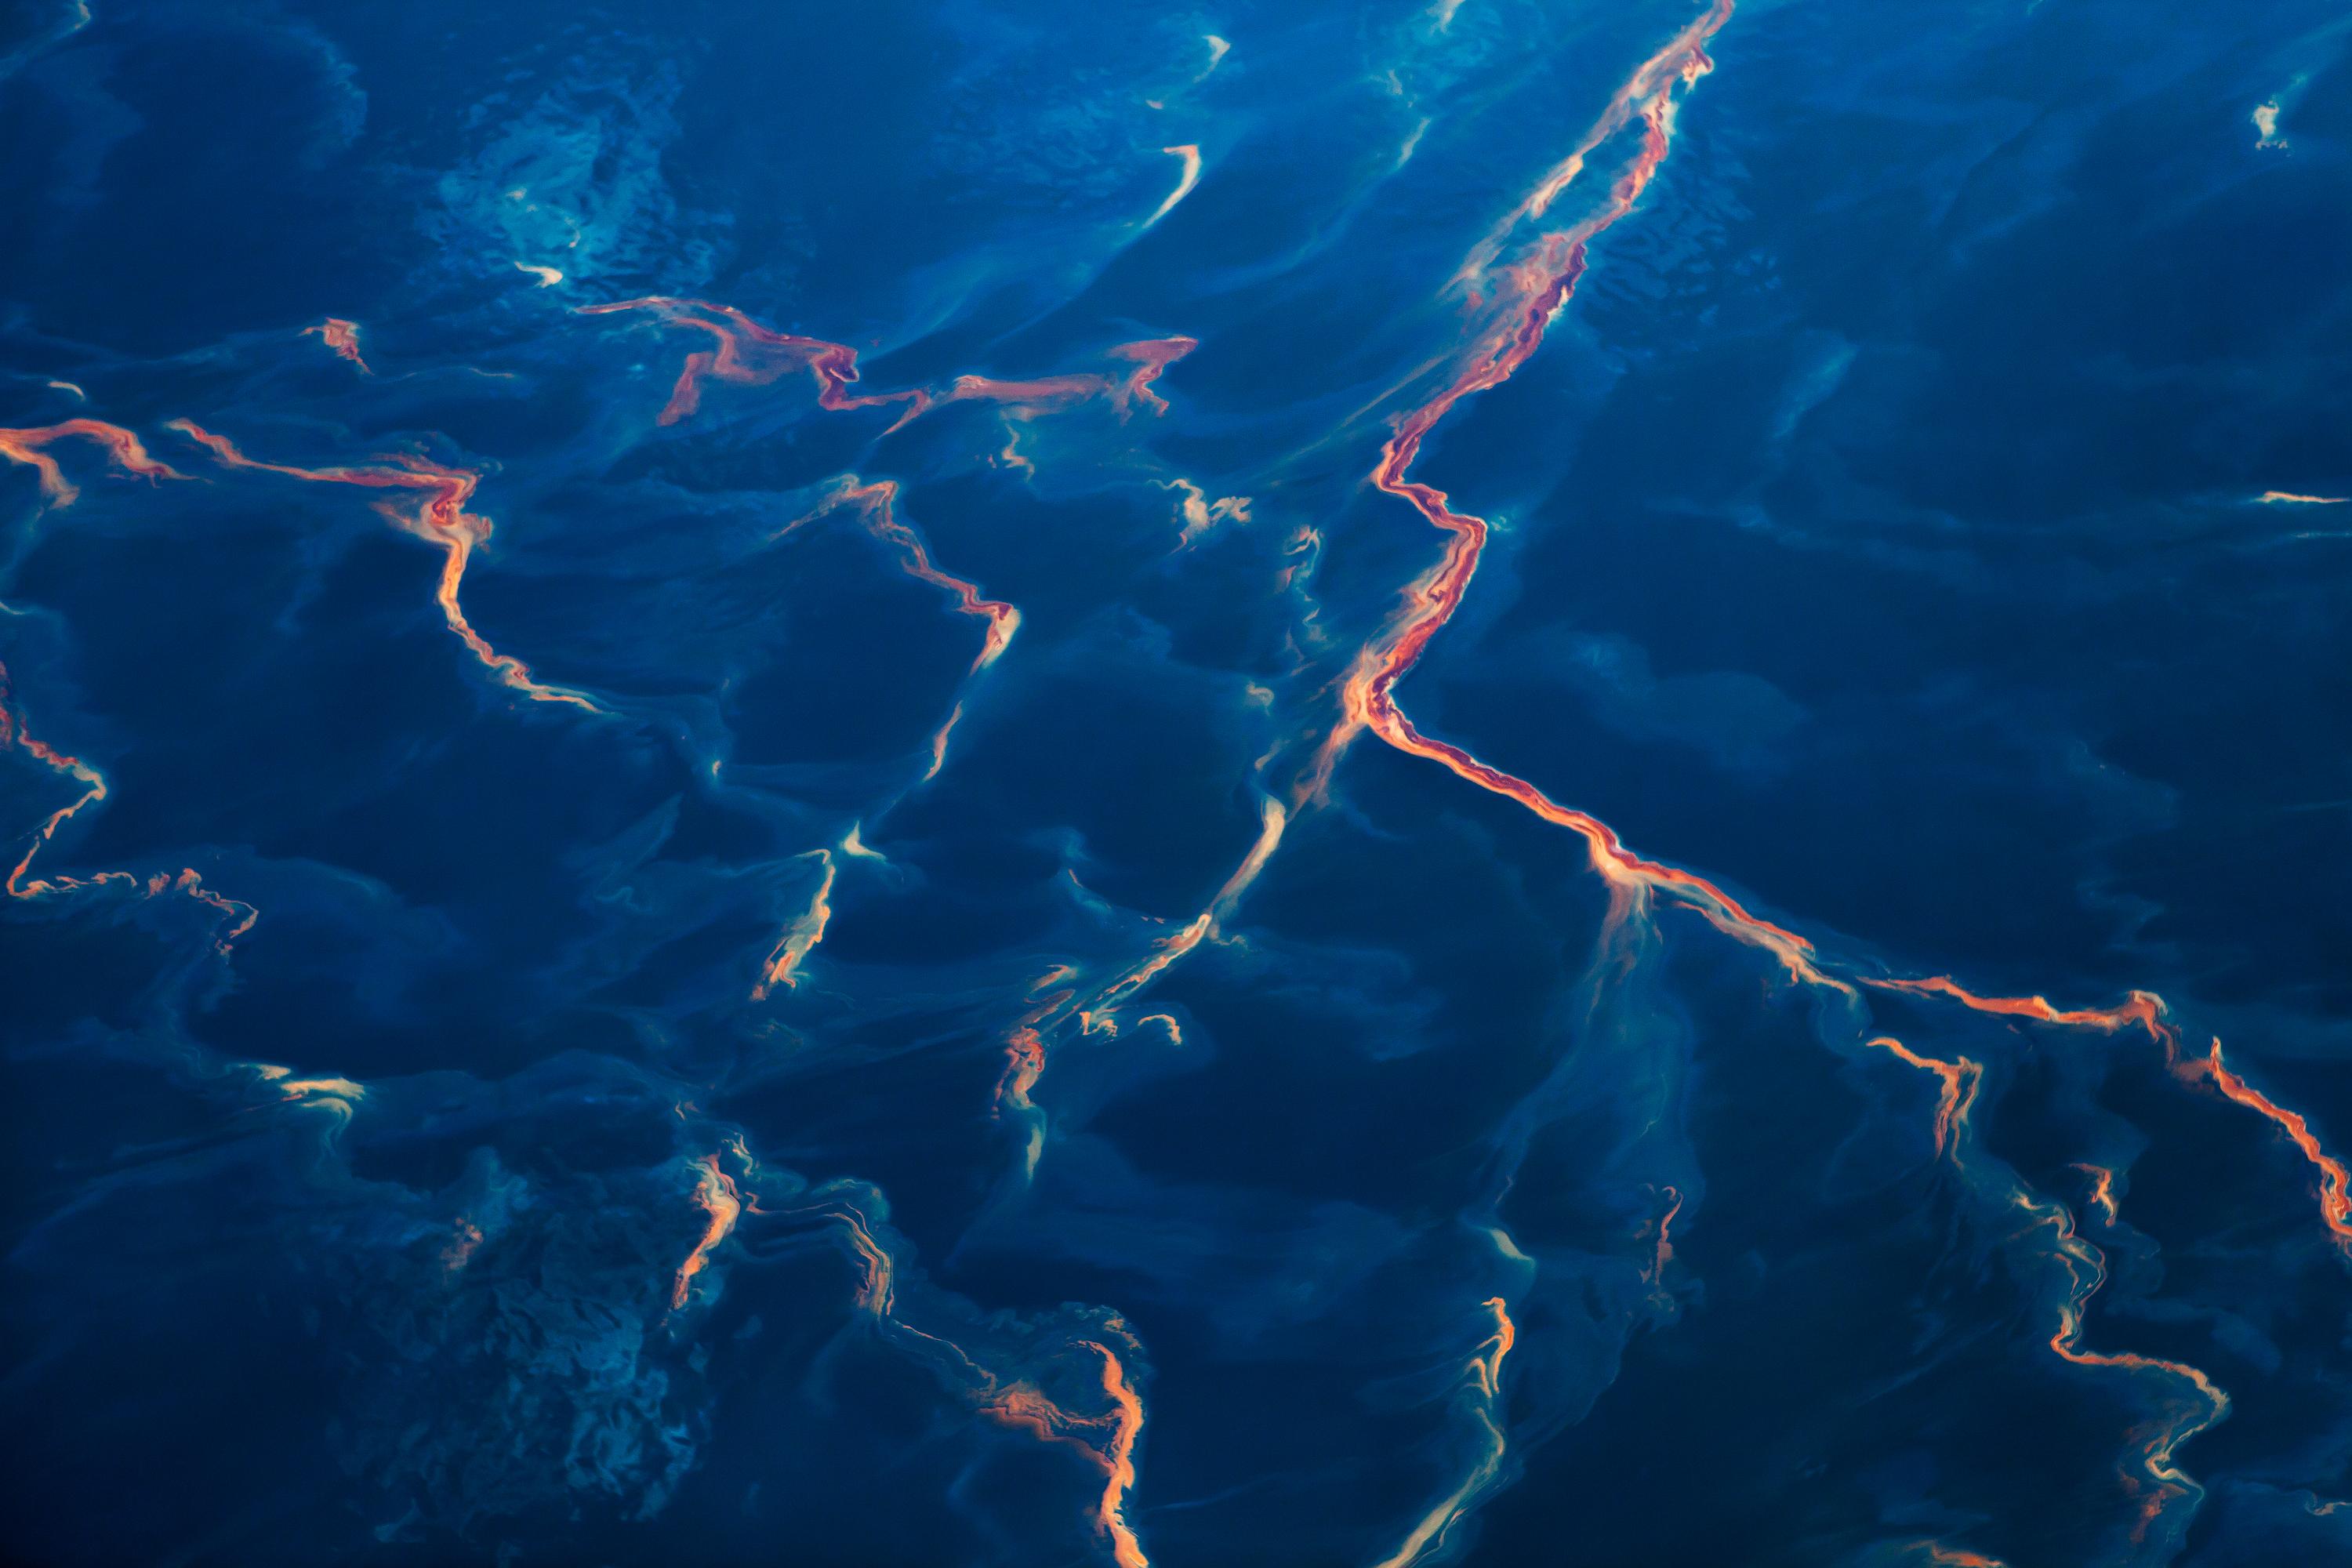 Daniel Beltra Color Photograph - Oil Spill #11